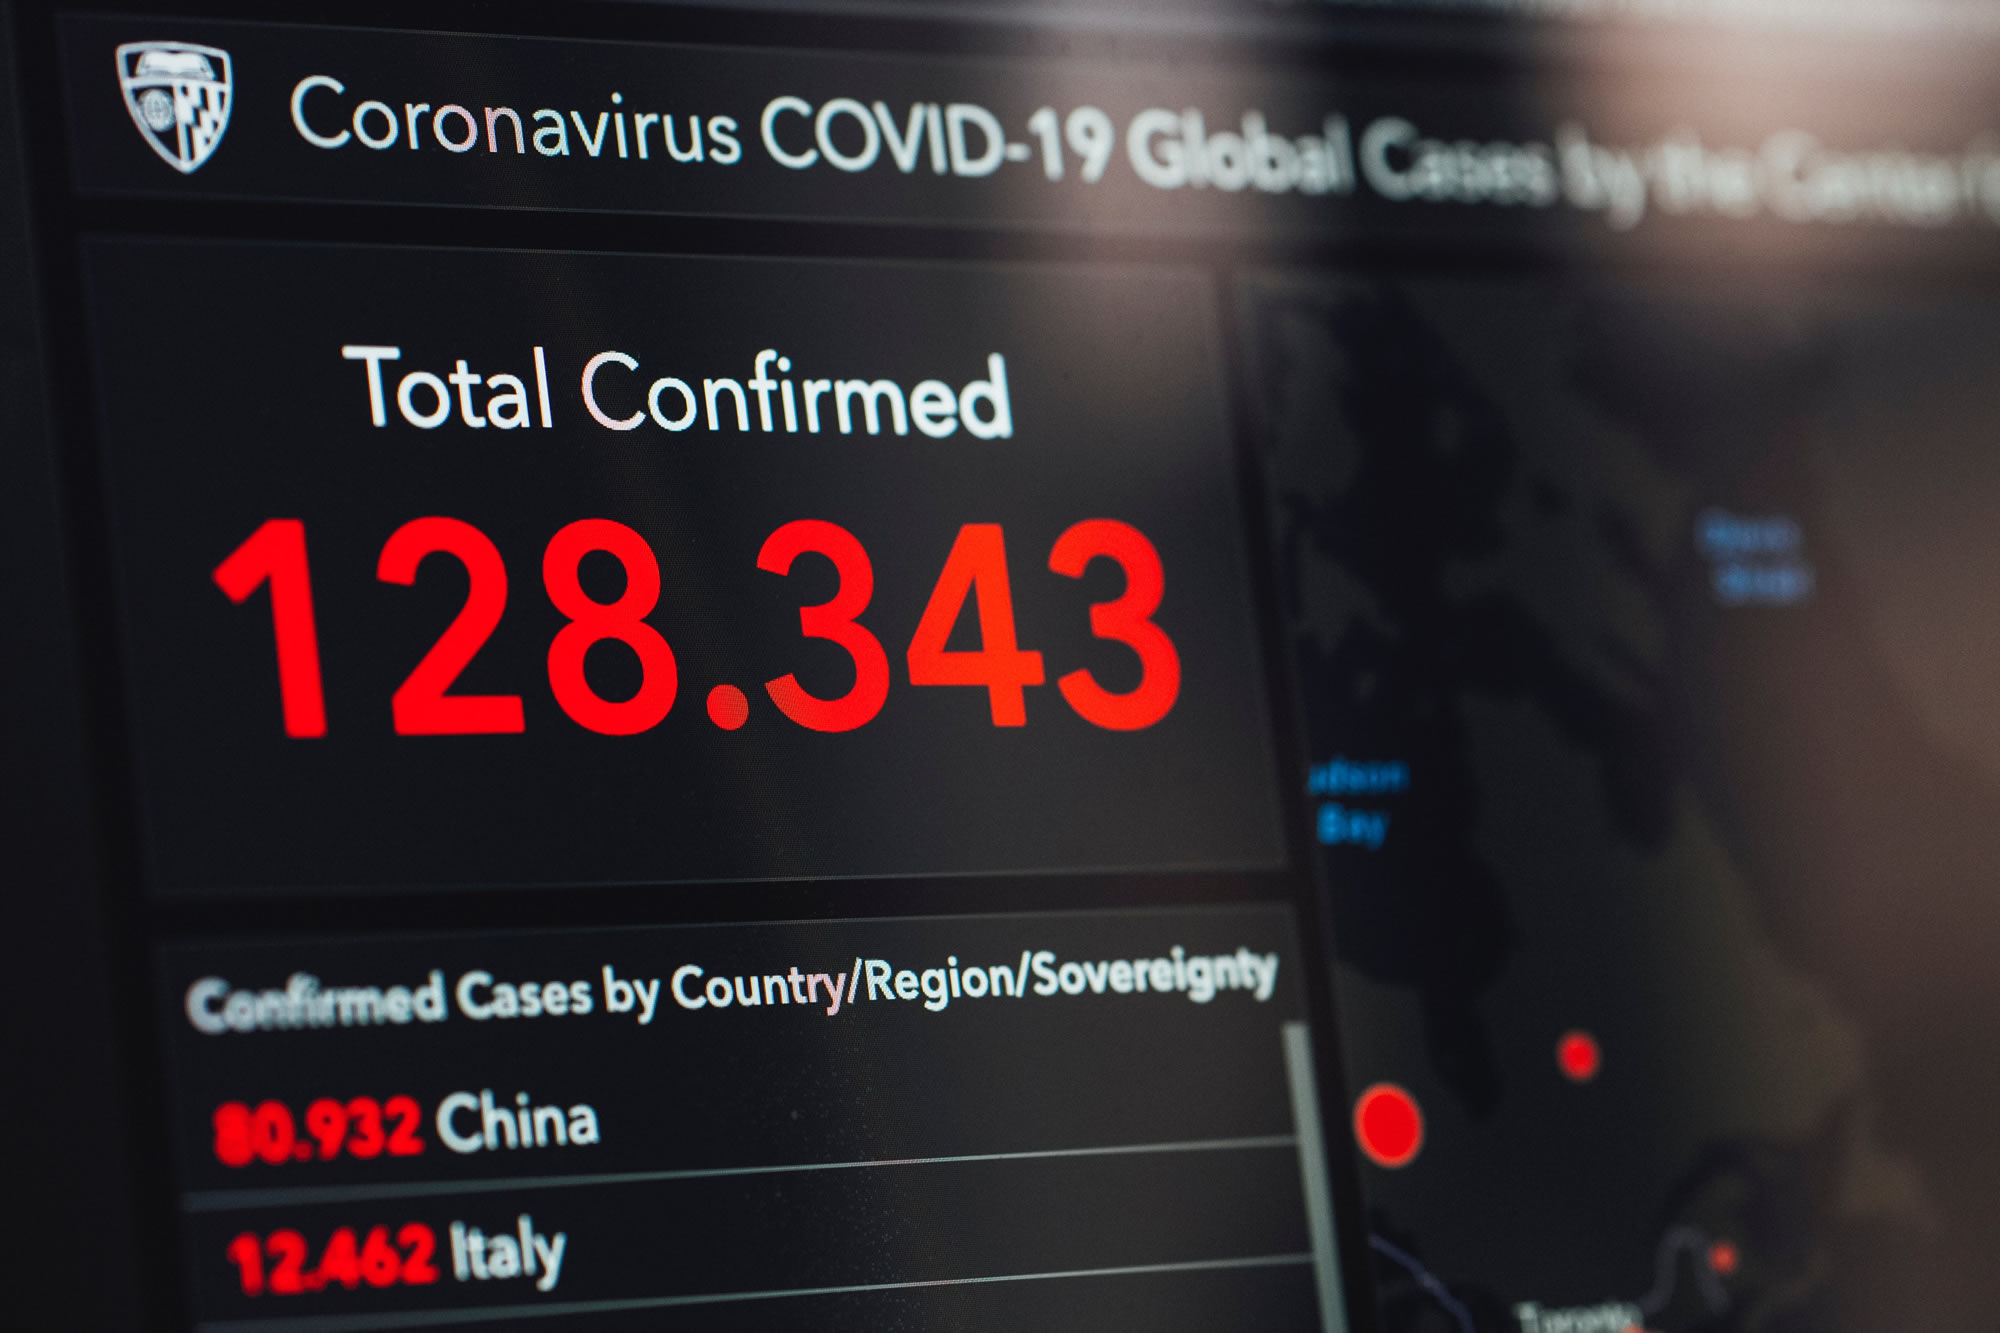 COVD-19 pandemic